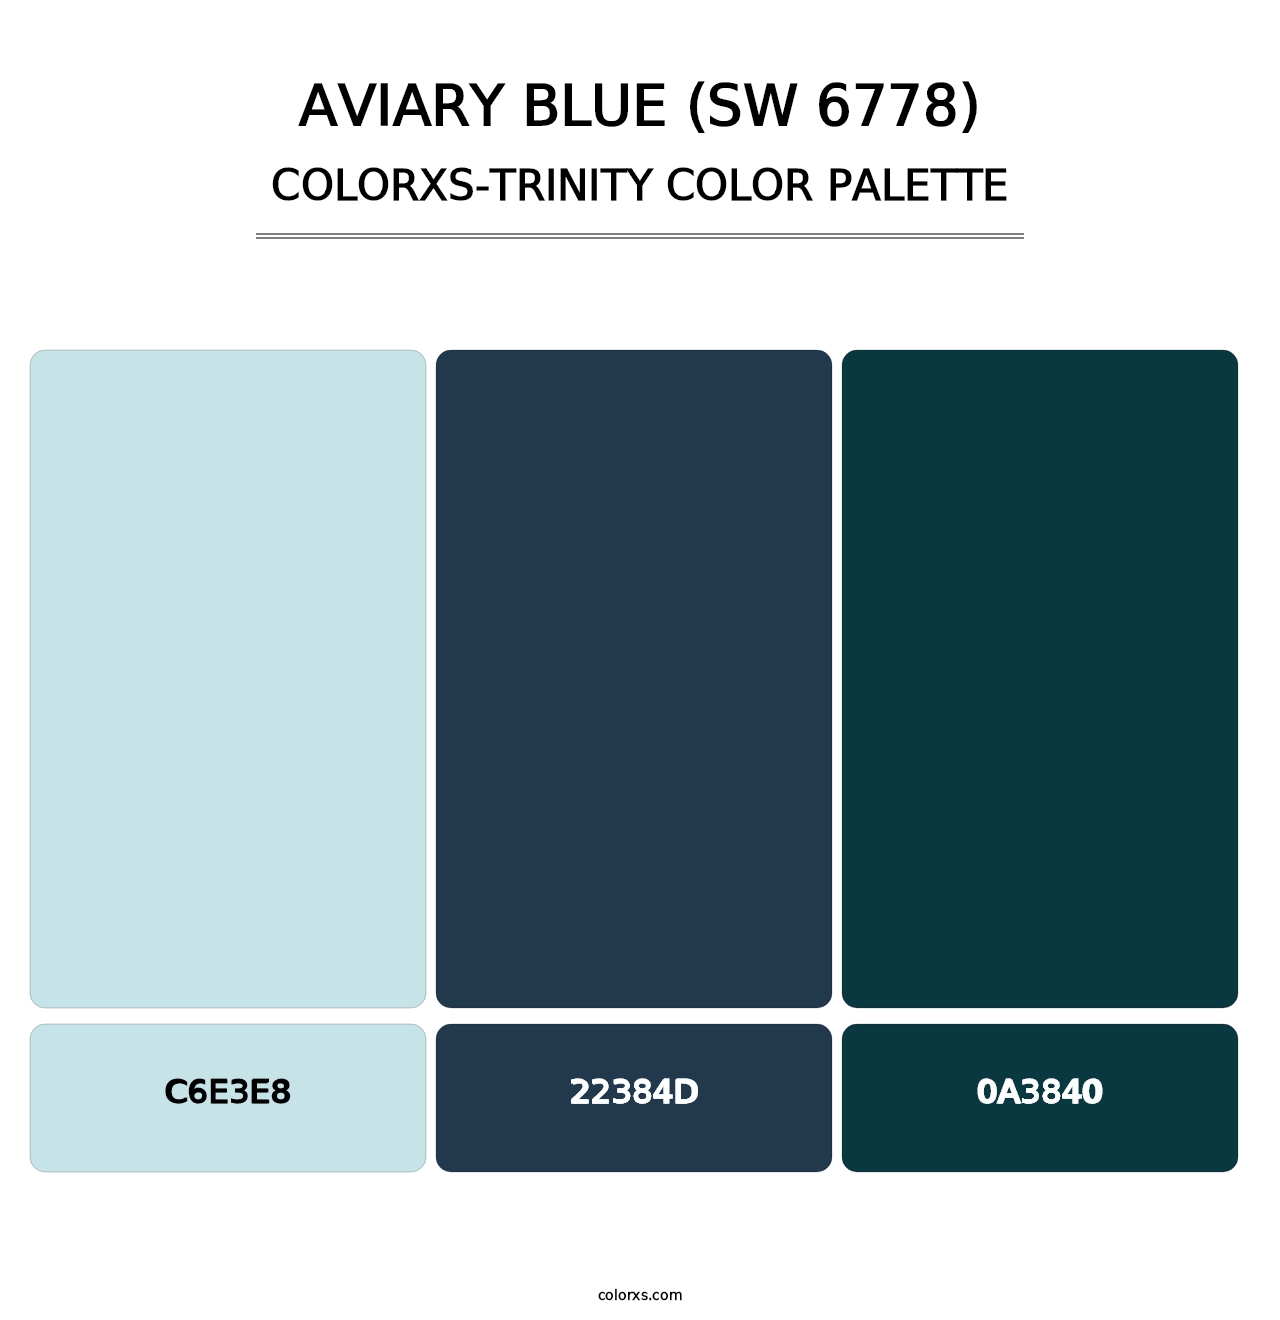 Aviary Blue (SW 6778) - Colorxs Trinity Palette